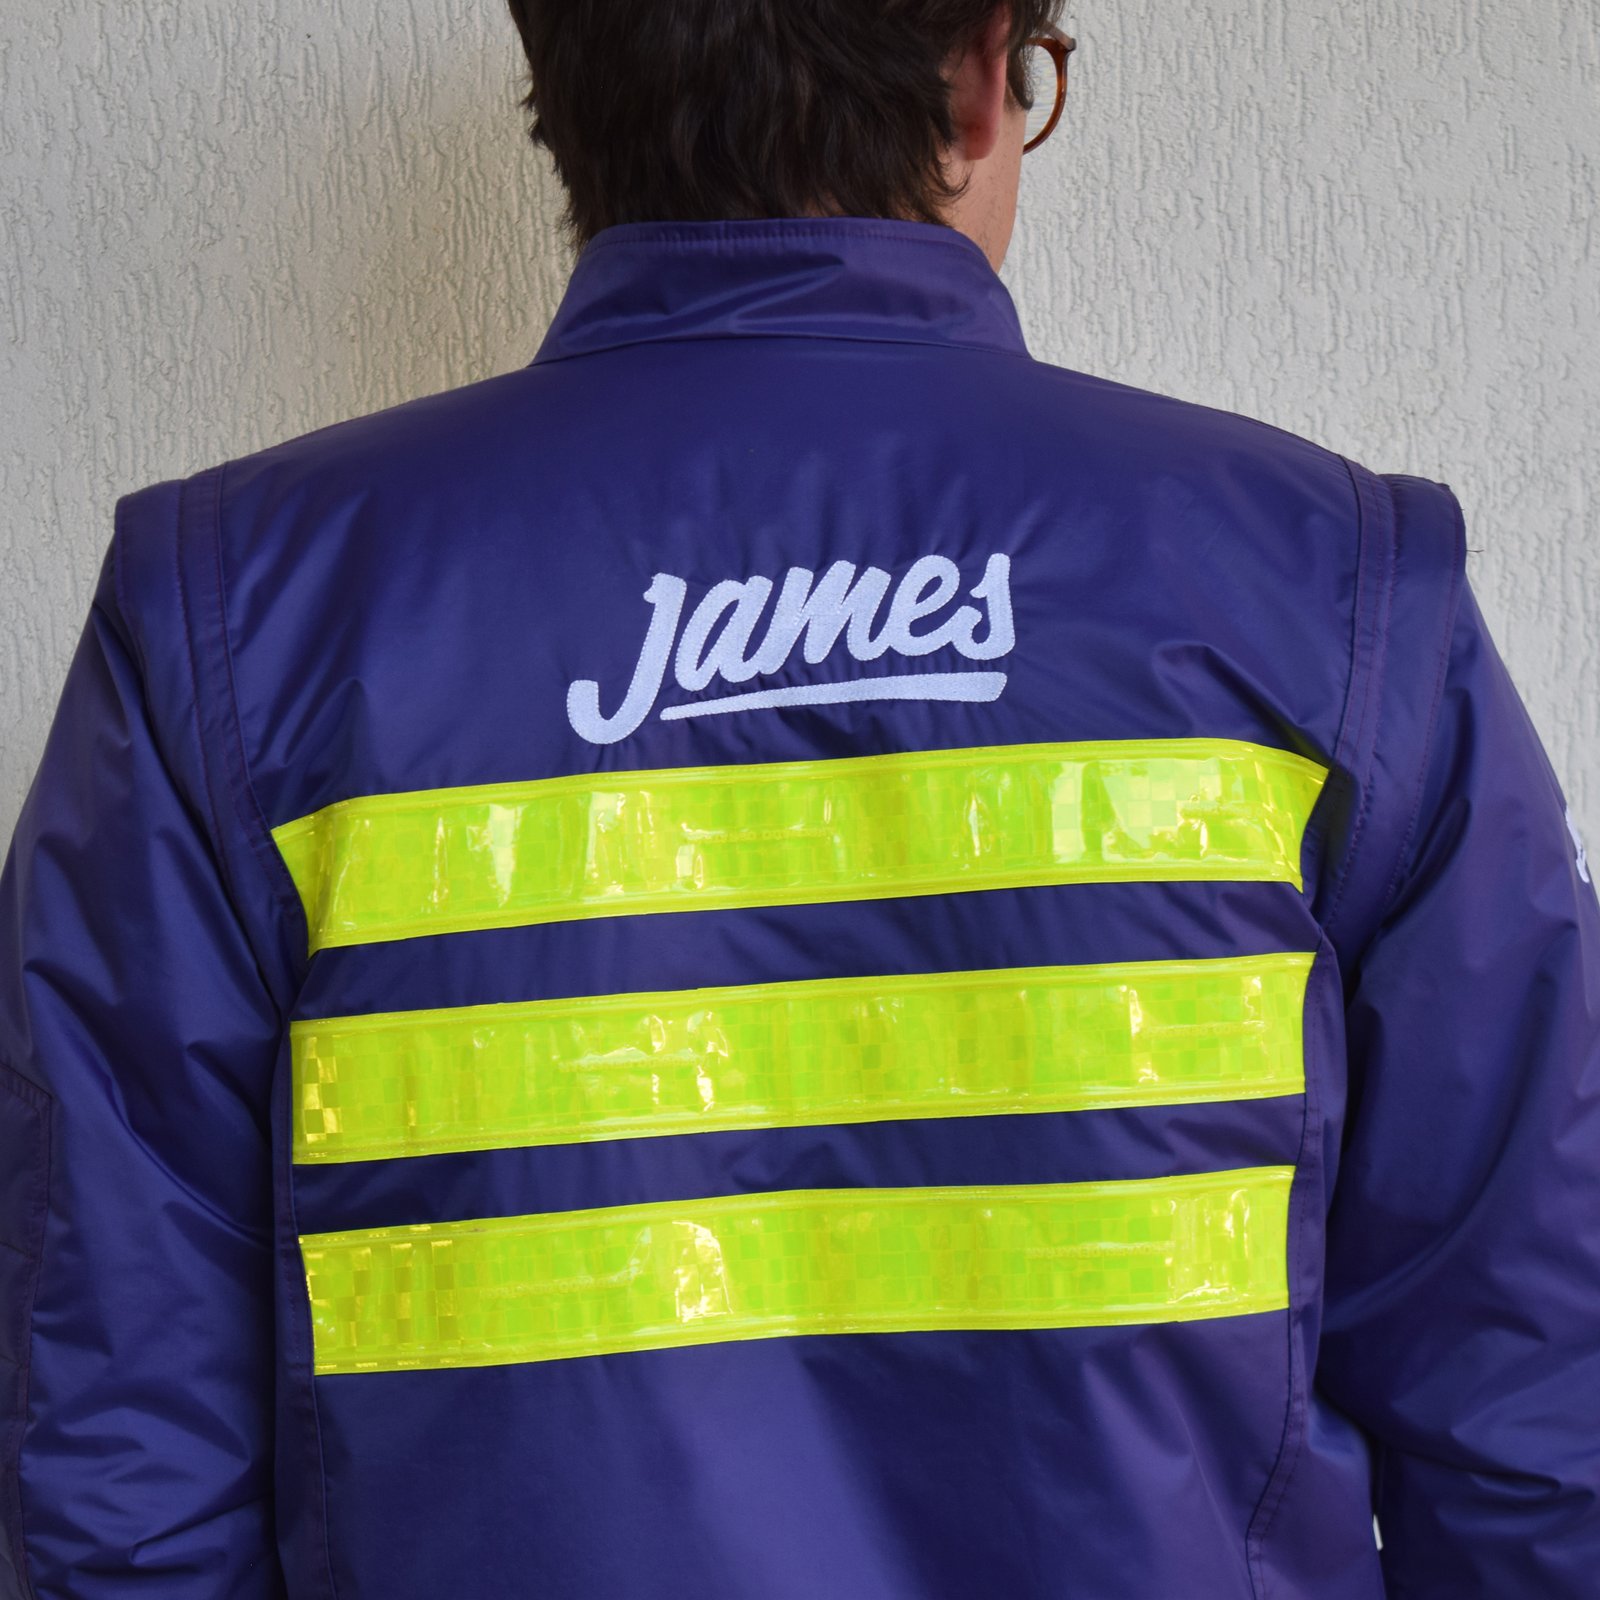 jaqueta de motoboy com faixa refletiva